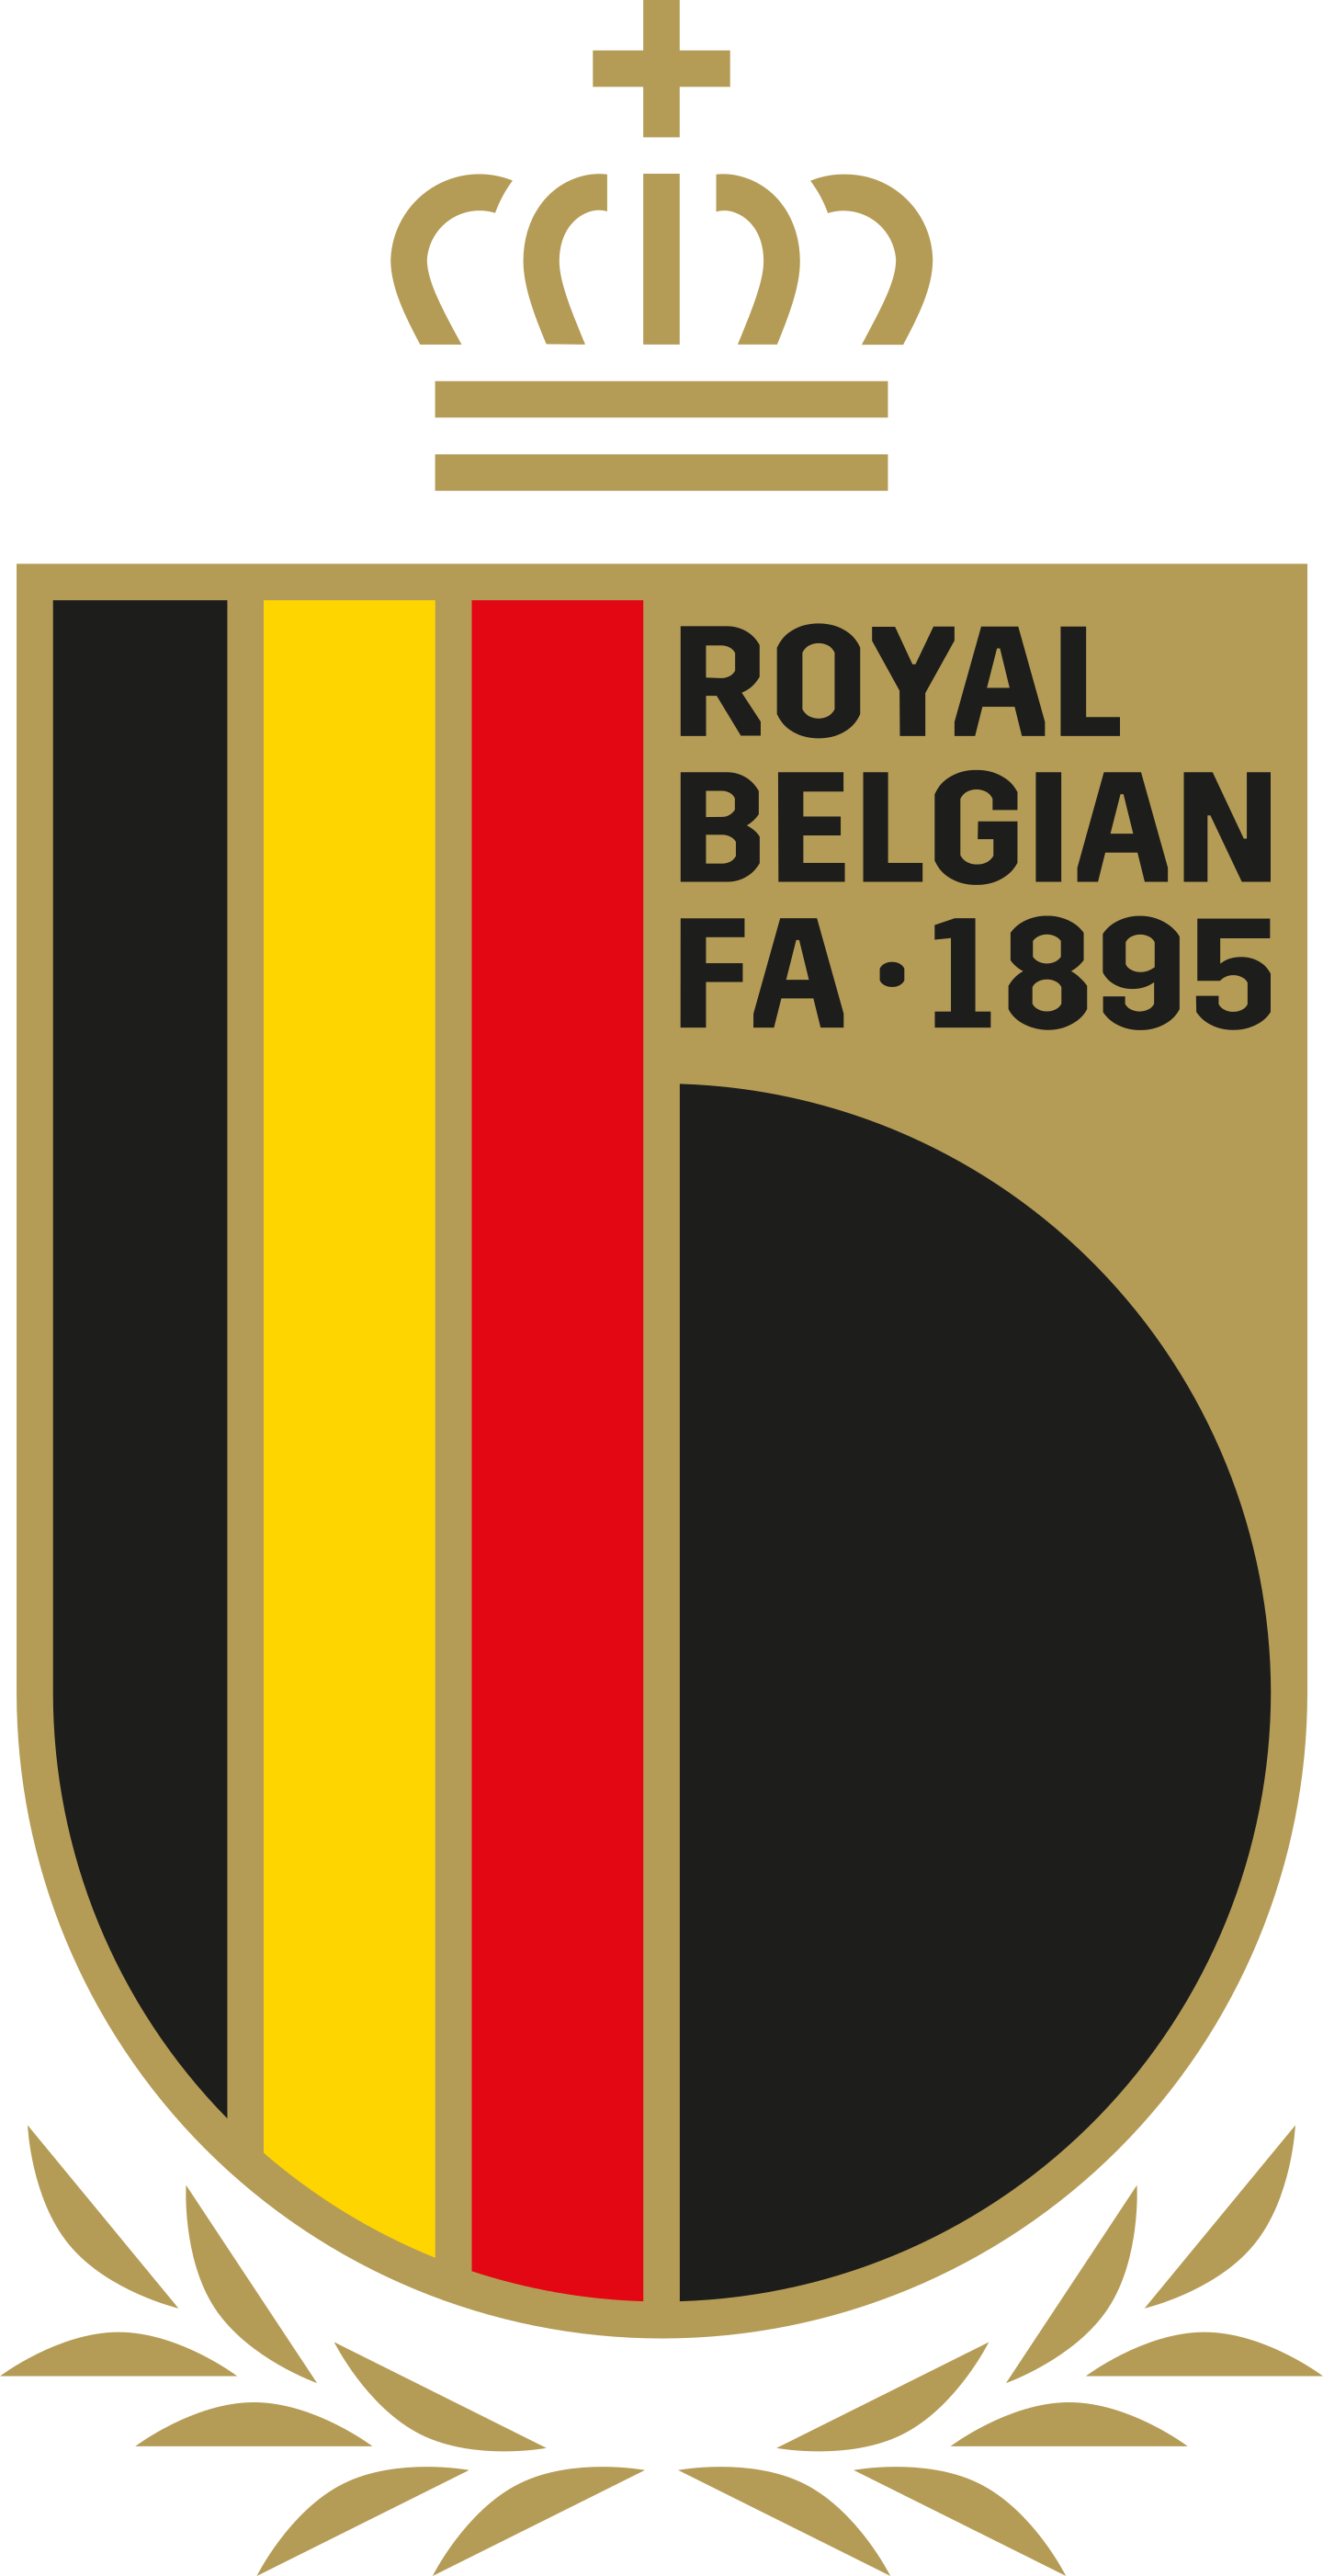 belgian national team logo 2 - Belgium National Football Team Logo